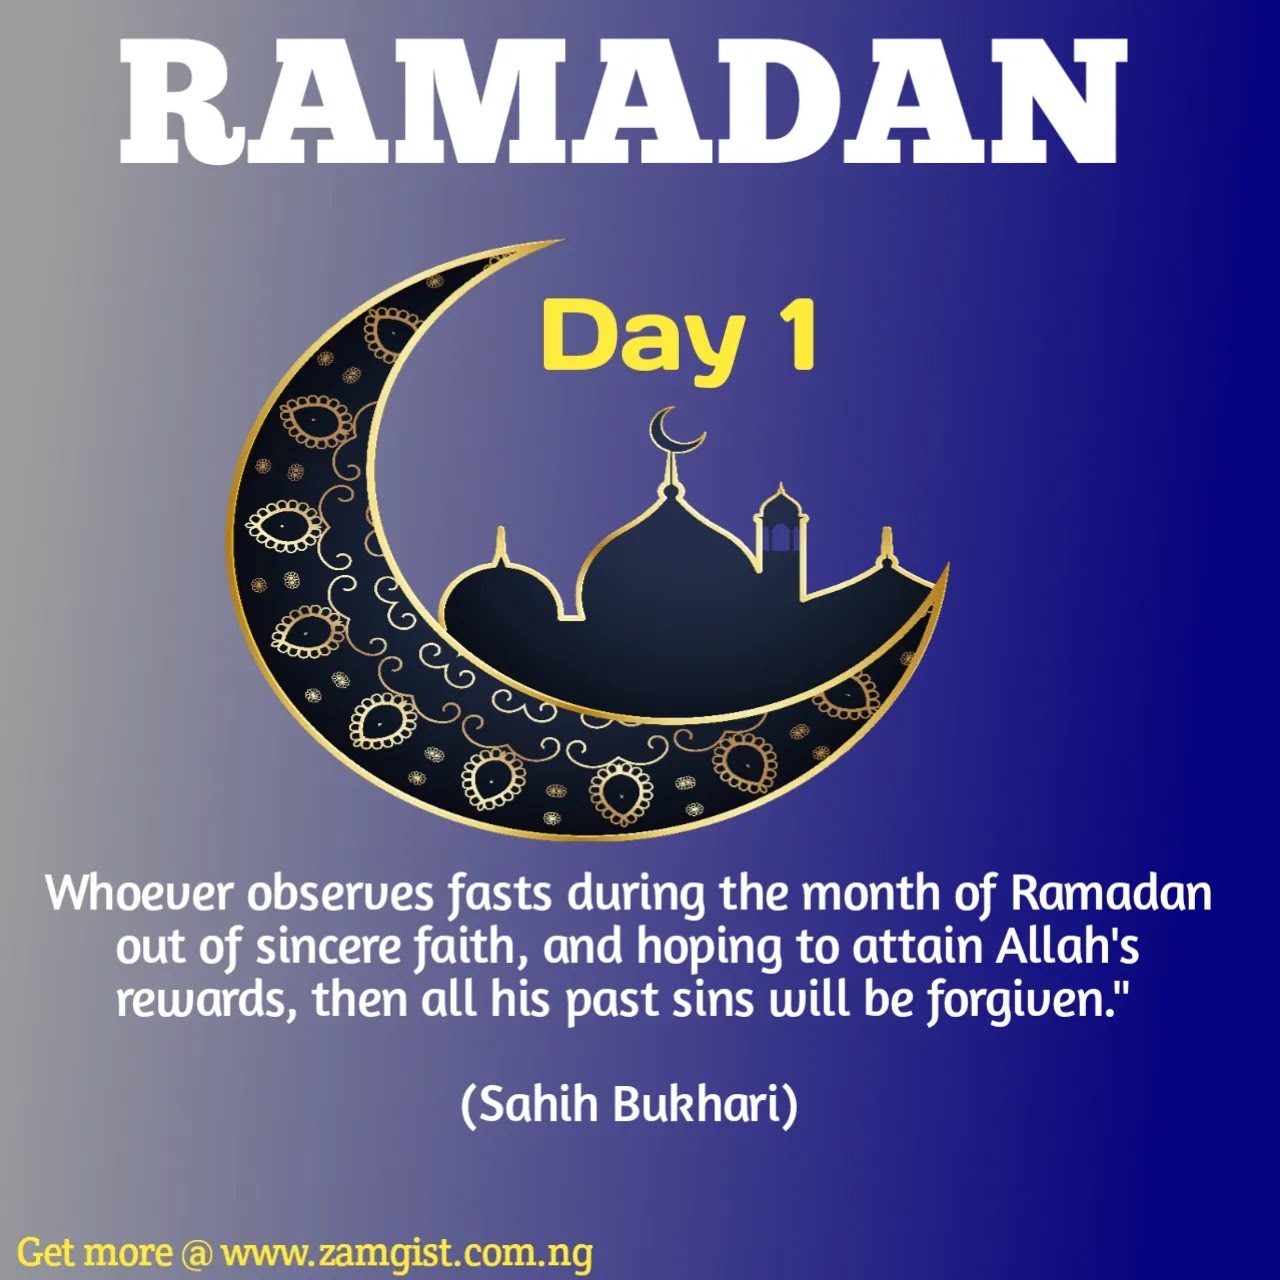 Ramadan Day 1 Image